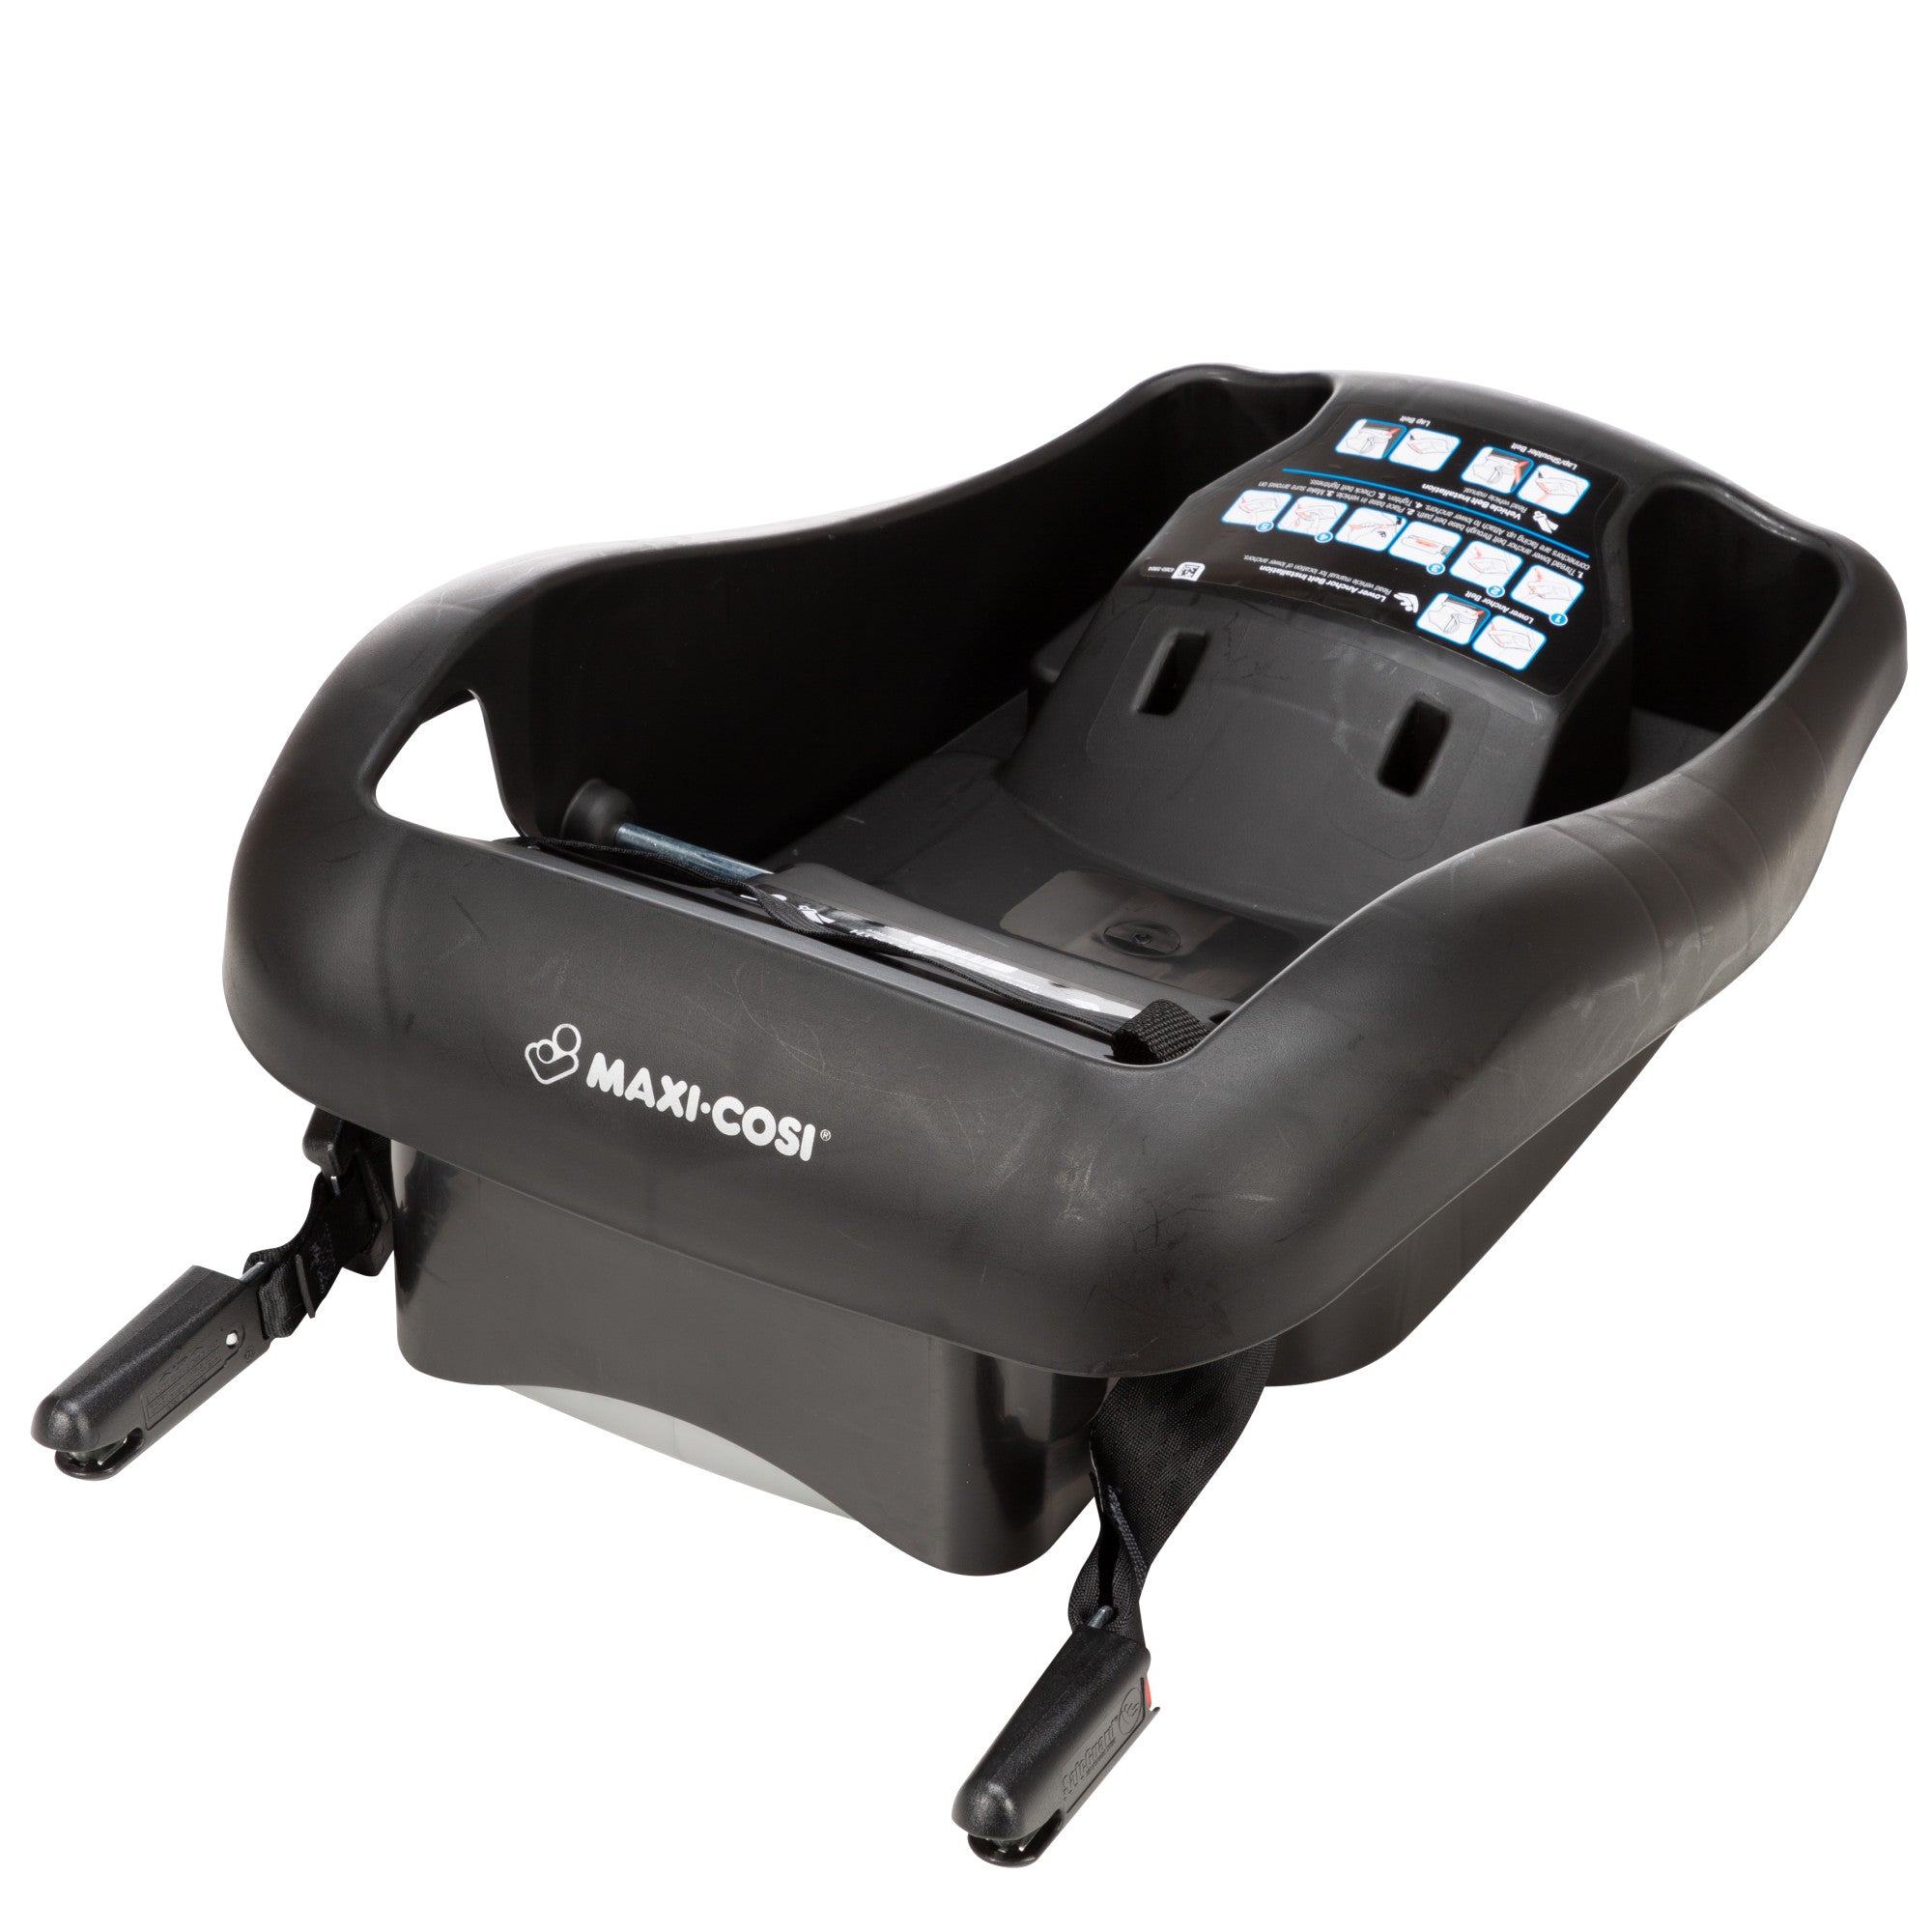 Maxi-Cosi Mico 3 Infant Car Seat Base in Black